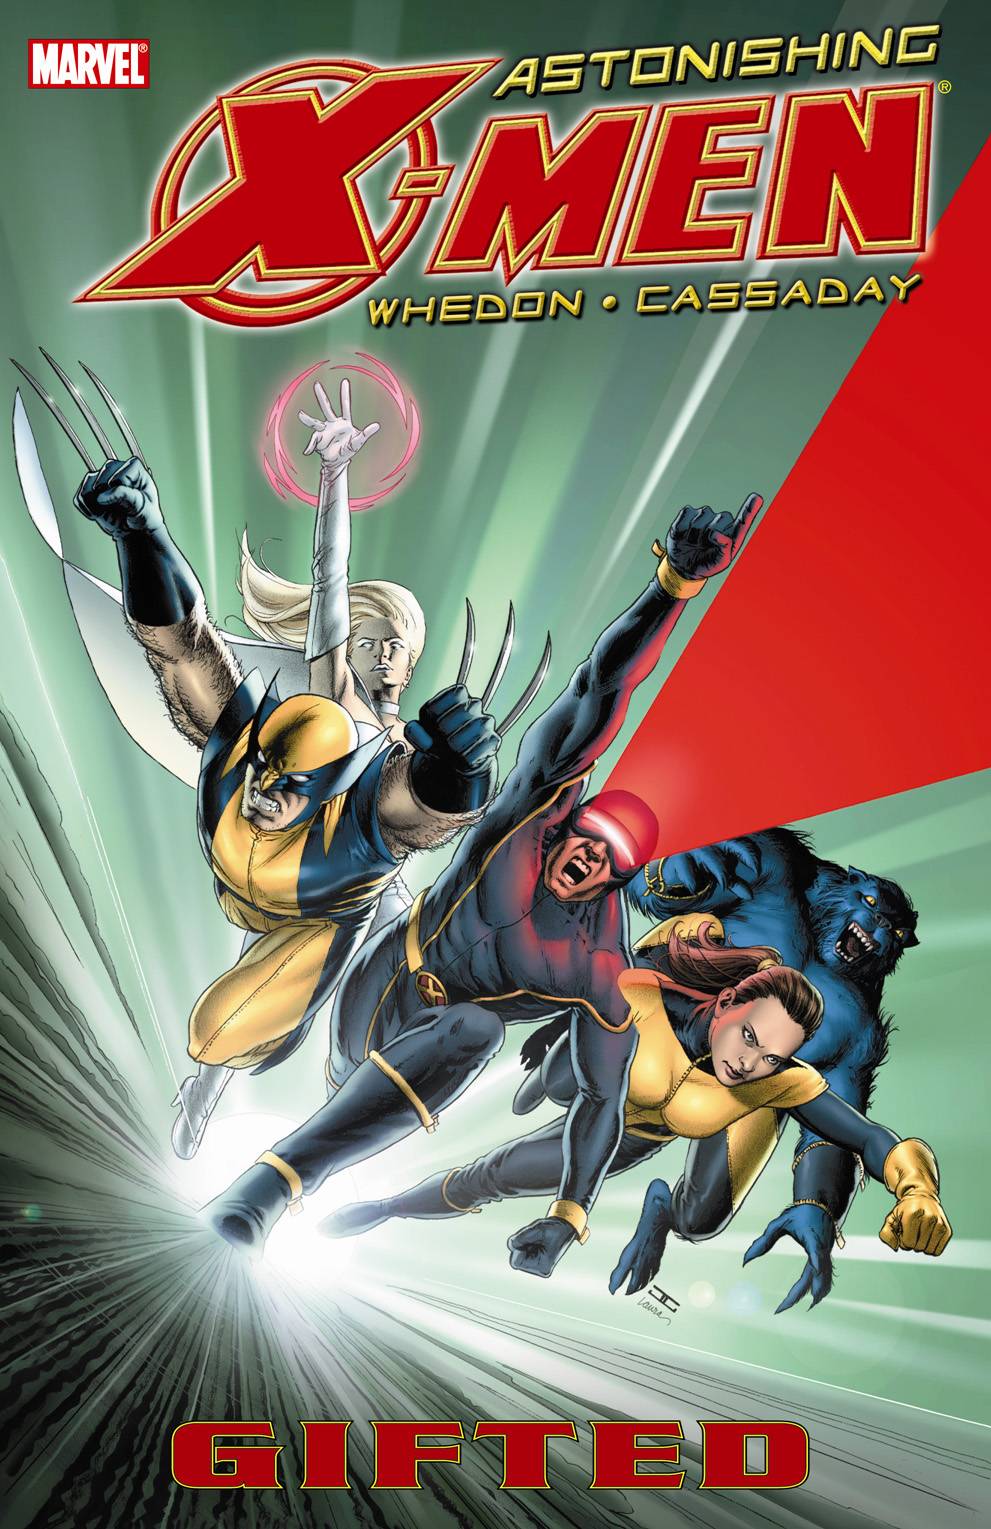 Astonishing X-Men Graphic Novel Volume 1 Gifted